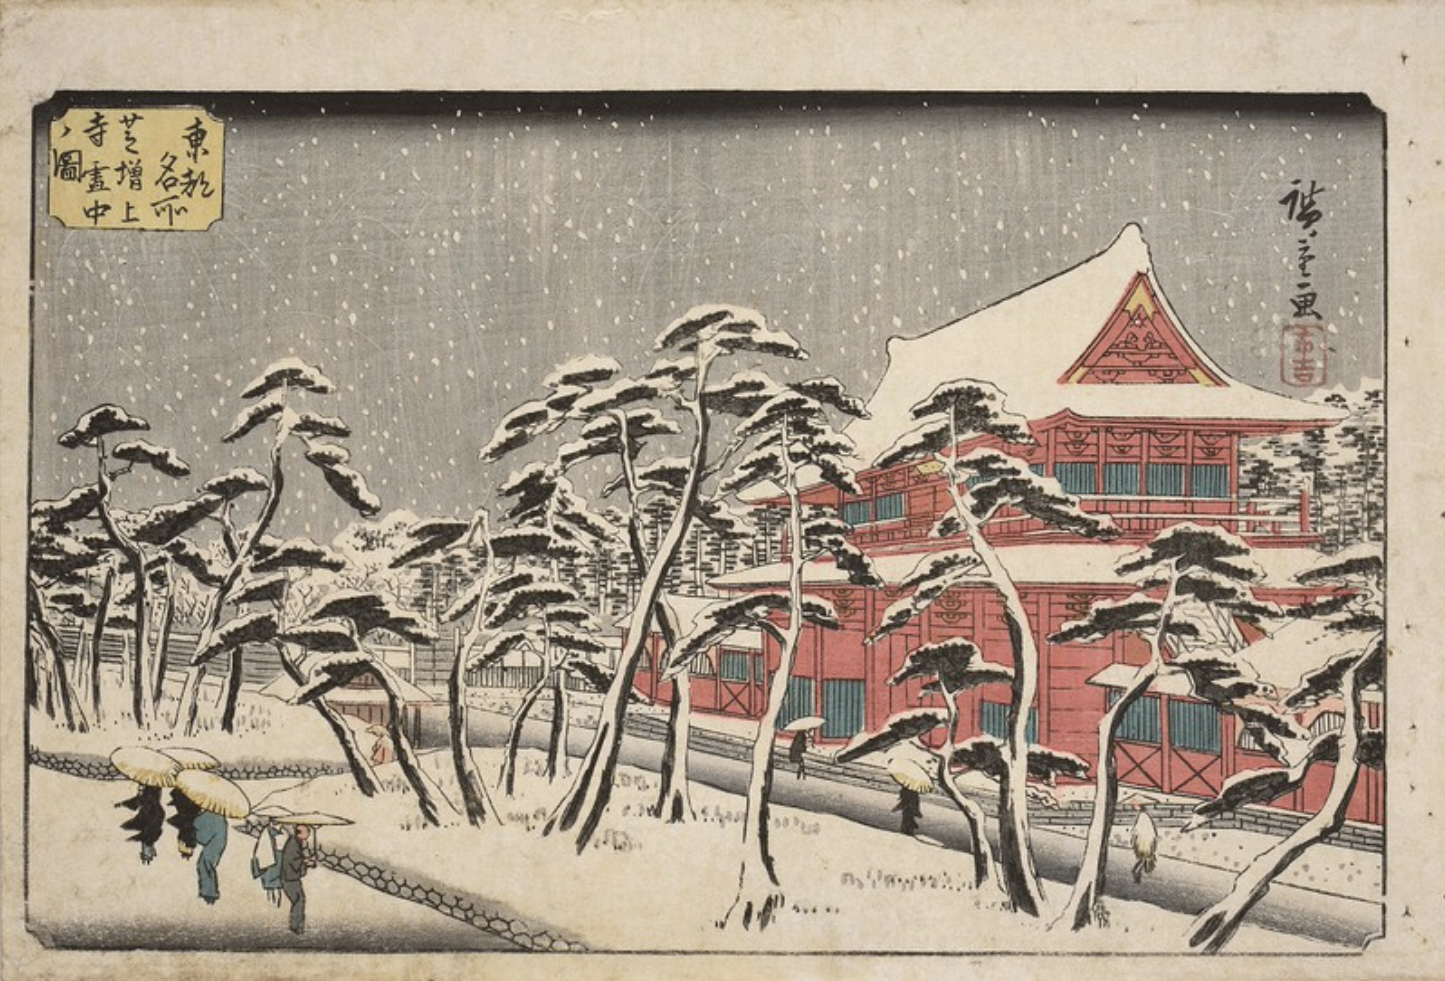 “Zojoji Temple in Snow, Japanese woodblock print